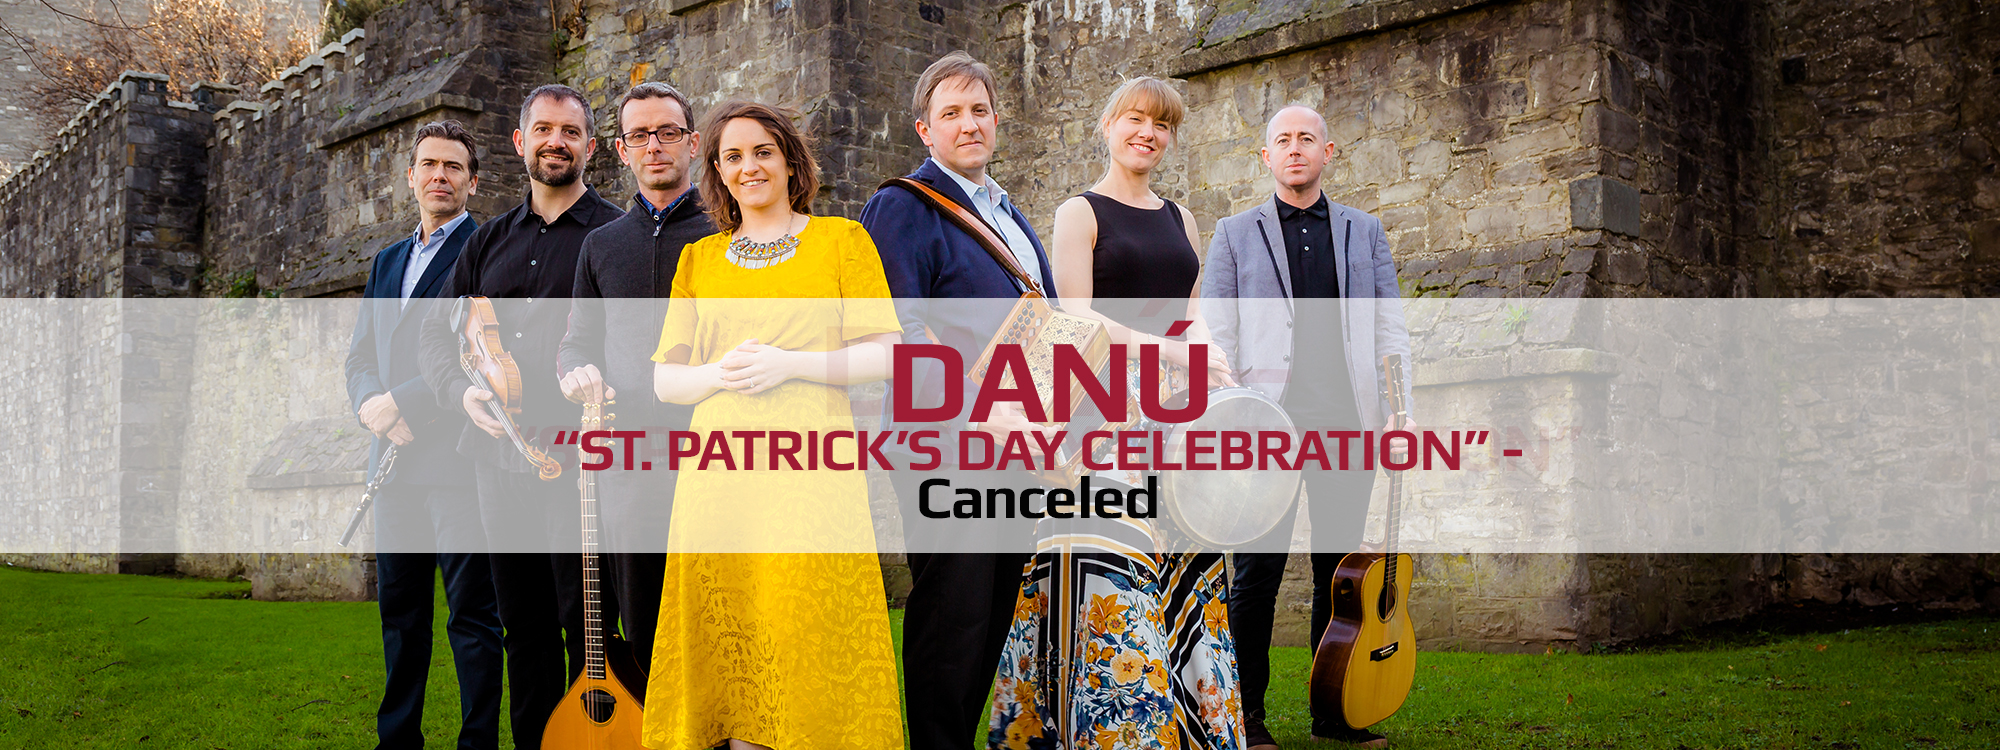 Danú – “St. Patrick’s Day Celebration”